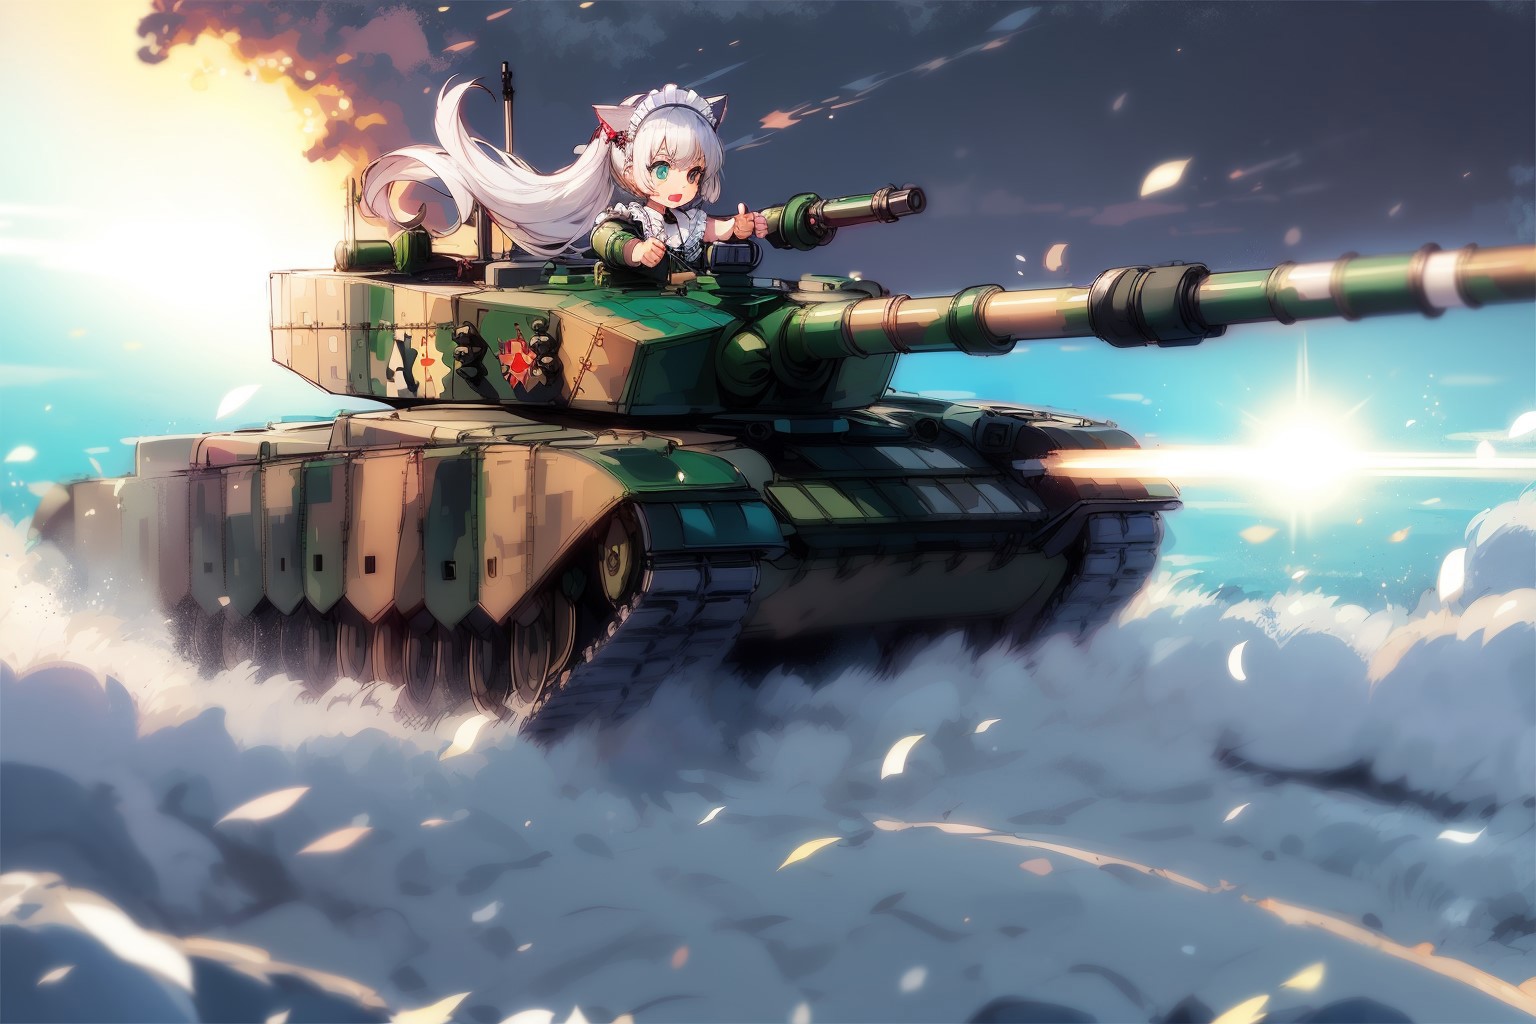 ZTZ-99A tank image by Mikoeiaow